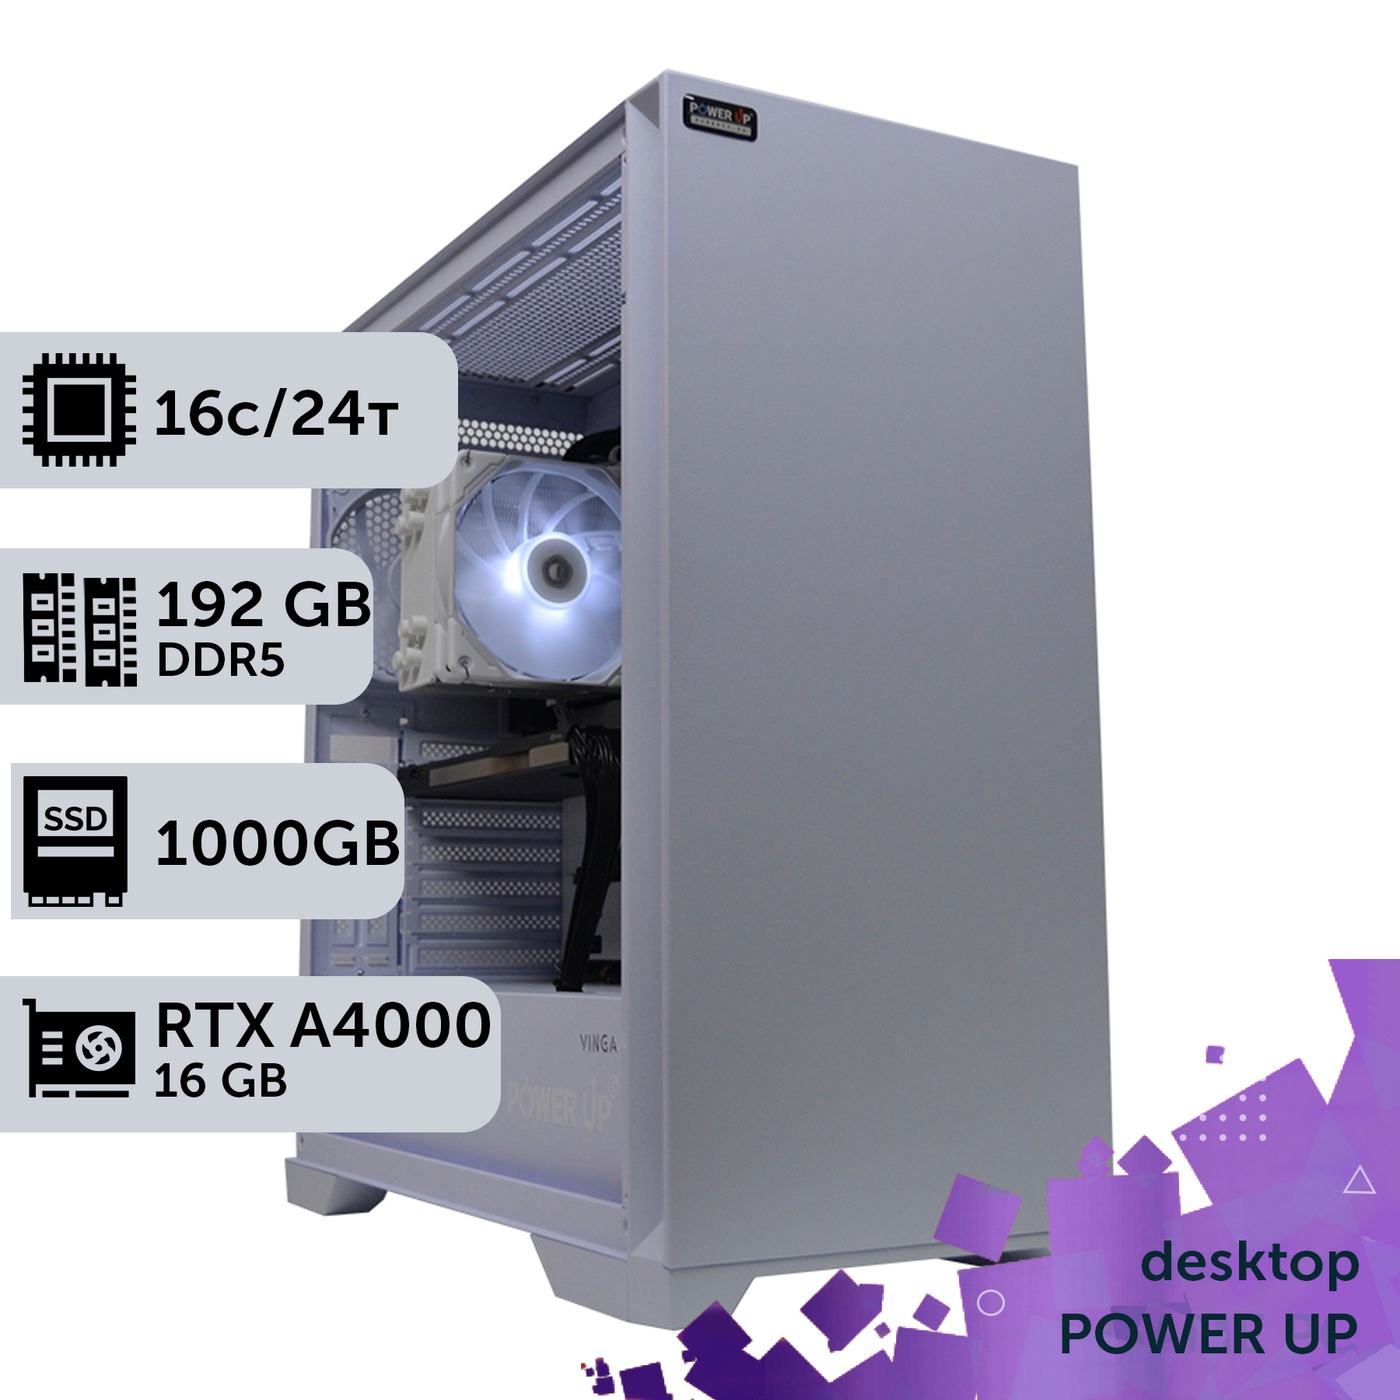 Робоча станція PowerUp Desktop #277 Core i7 13700K/192 GB/SSD 1TB/NVIDIA Quadro RTX A4000 16GB